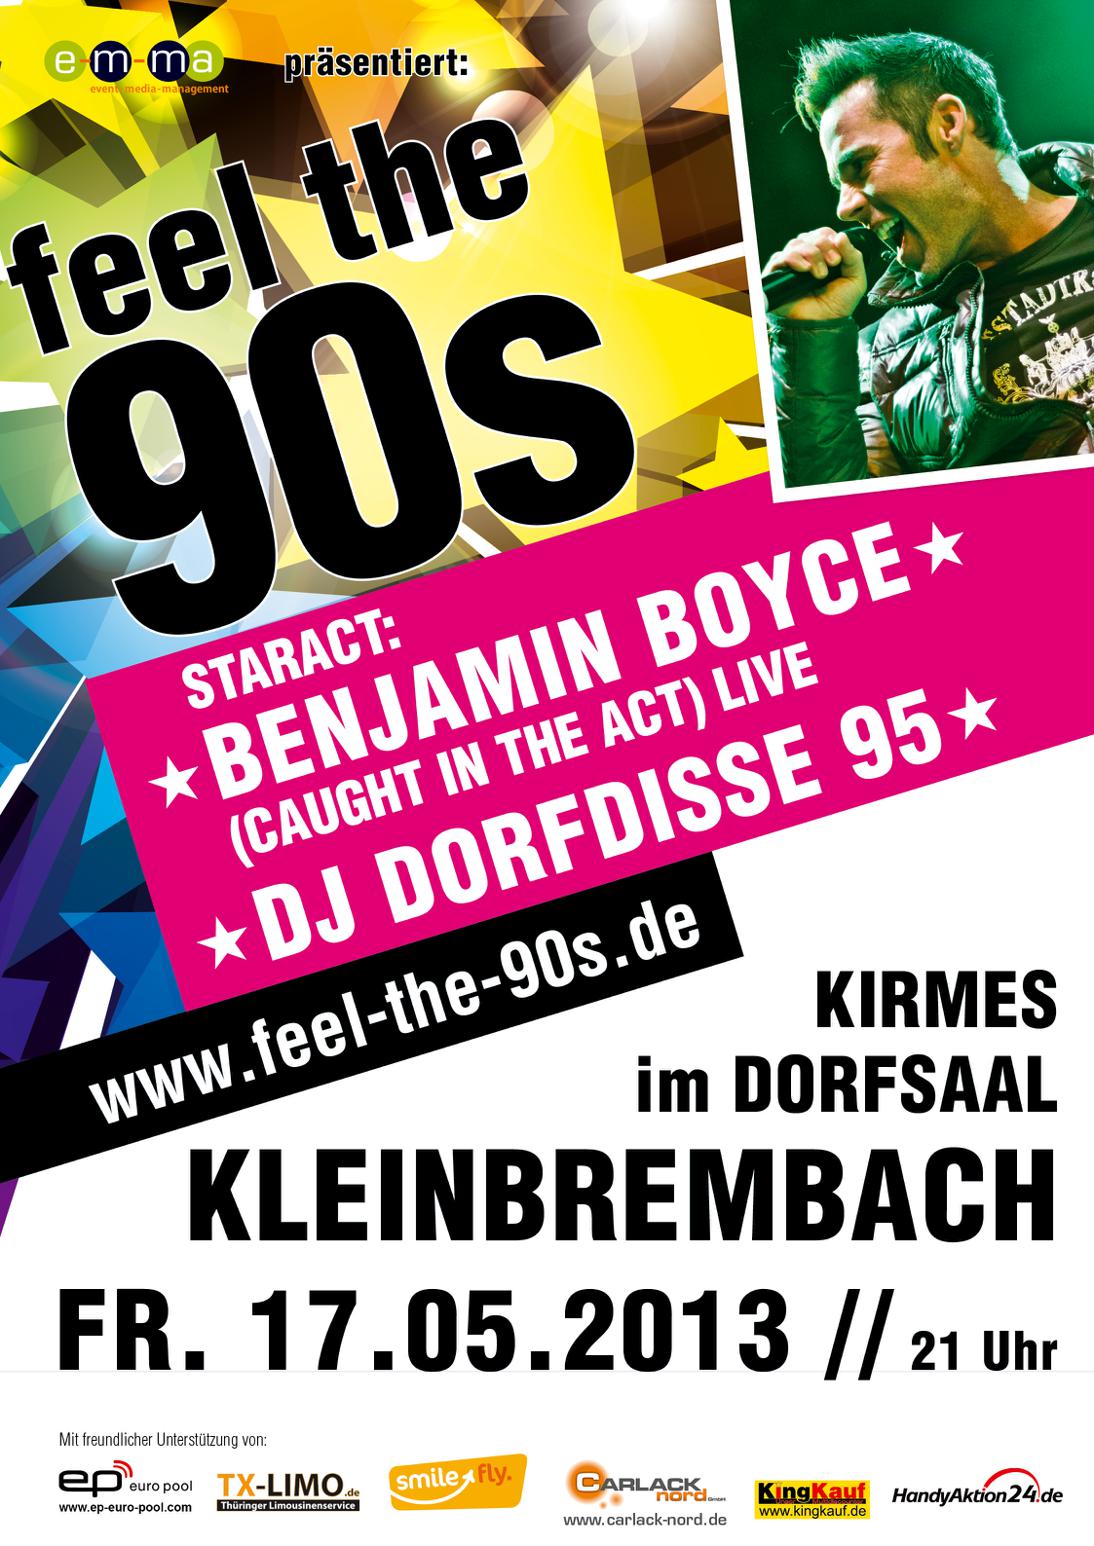 FEEL THE 90s - Staract: Benjamin Boyce (CITA) LIVE & DJ Dorfdisse 95